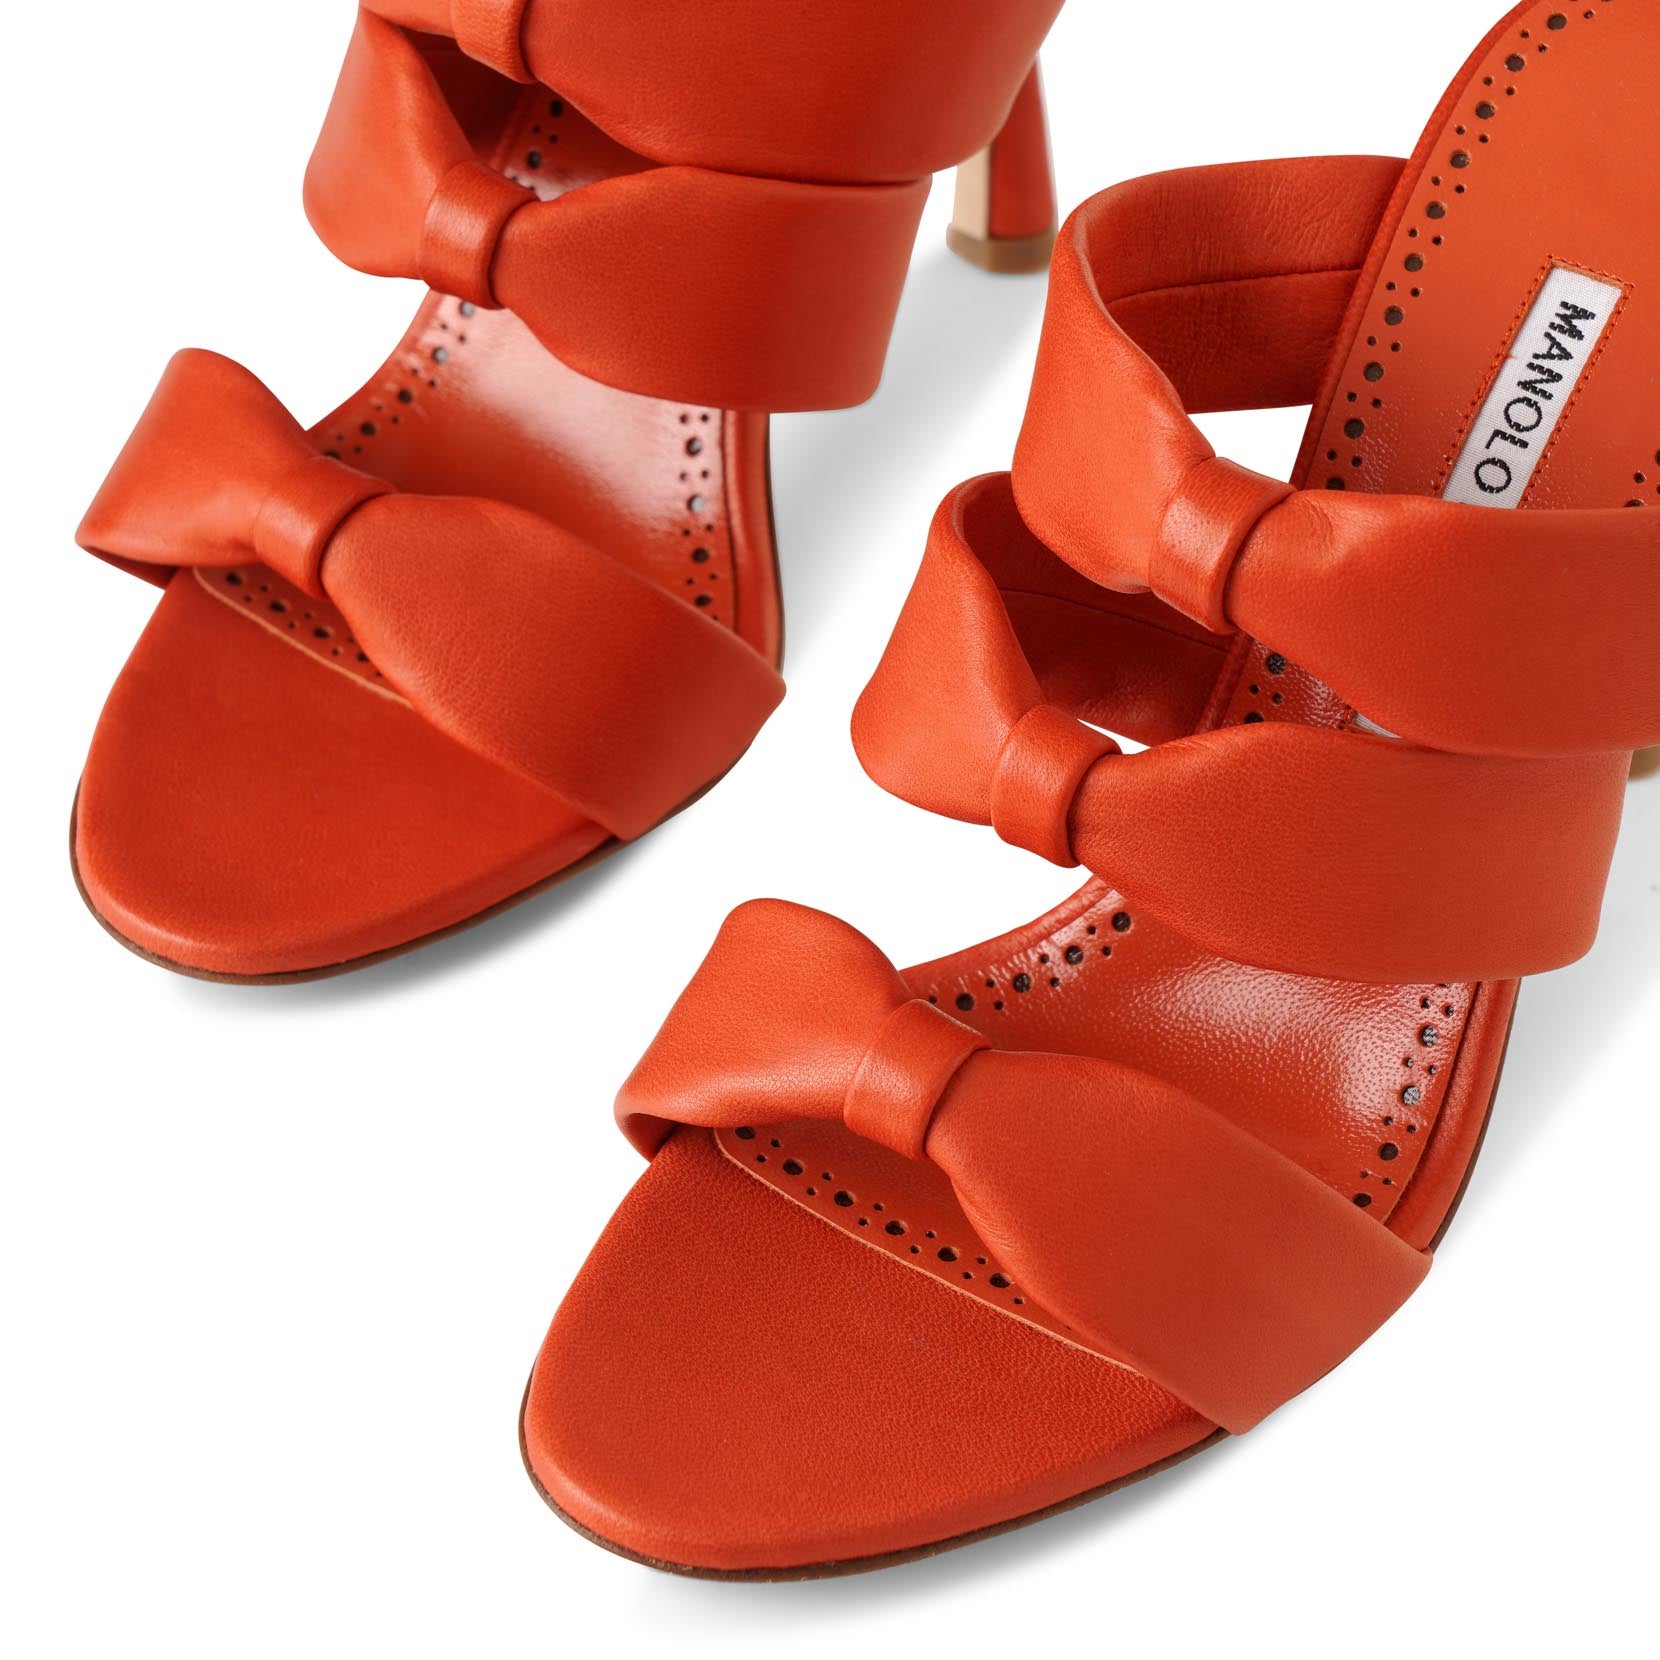 Gyrica 105 leather sandals